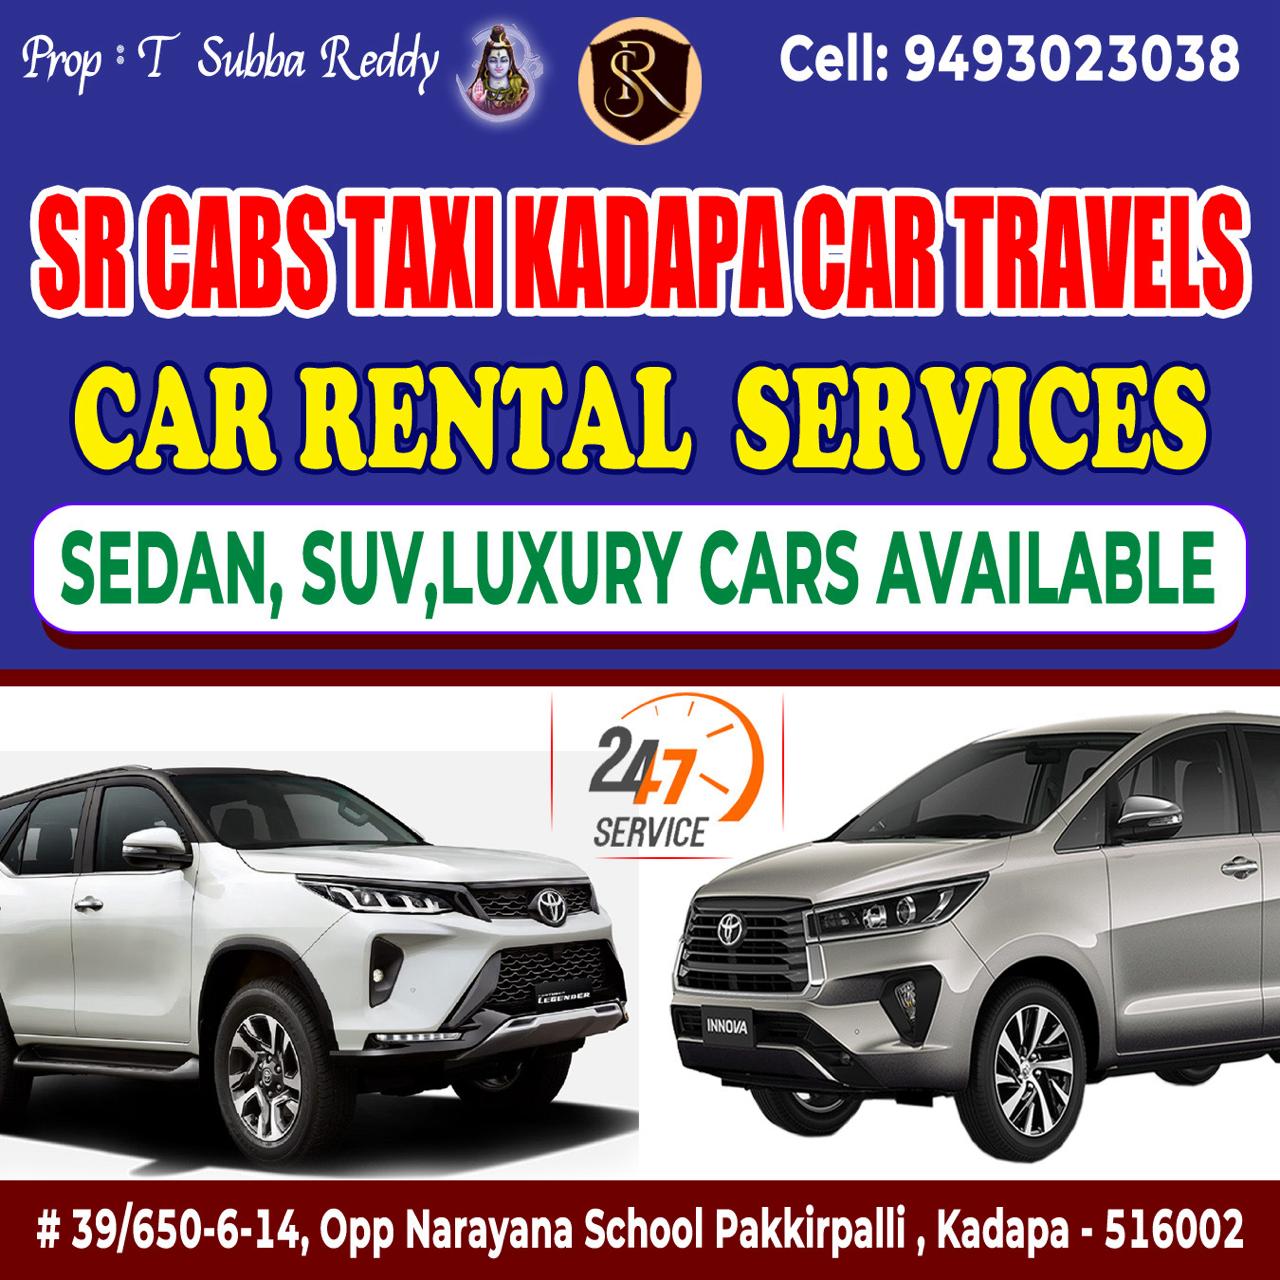 Kadapa Cabs Phone Number- 09493023038 image